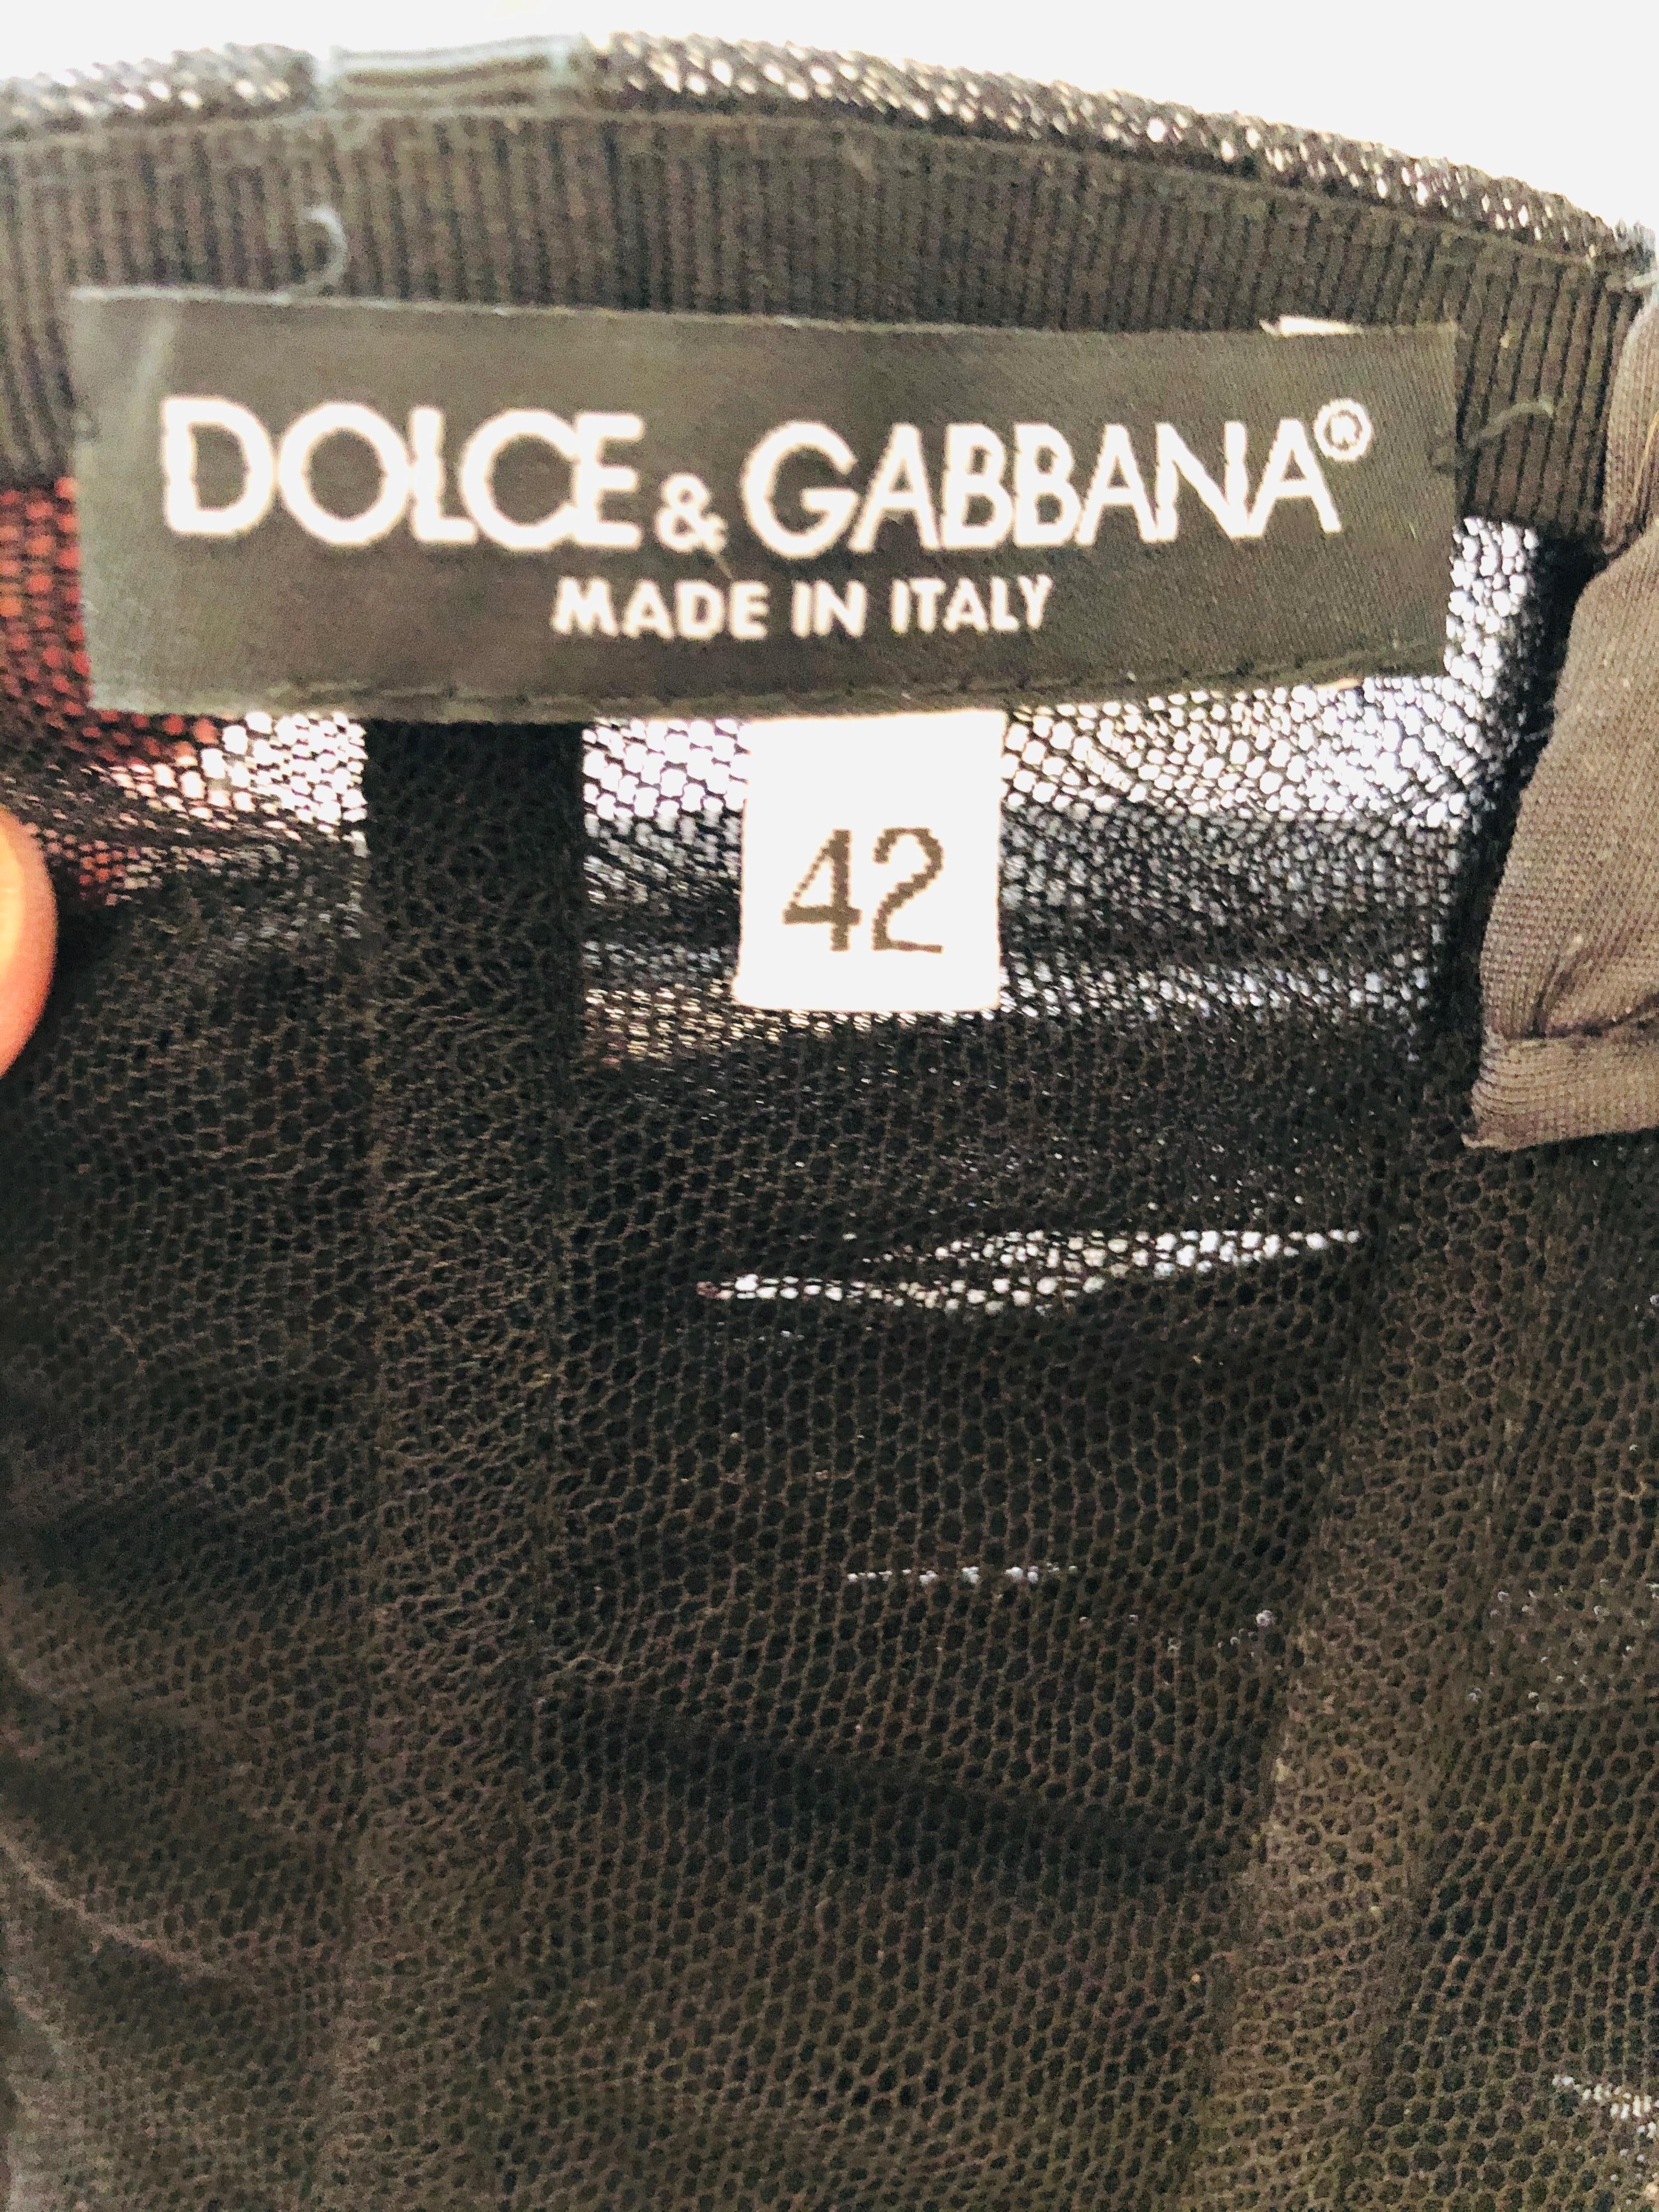  Dolce & Gabbana Sheer Vintage Black Net Draped Corset For Sale 3